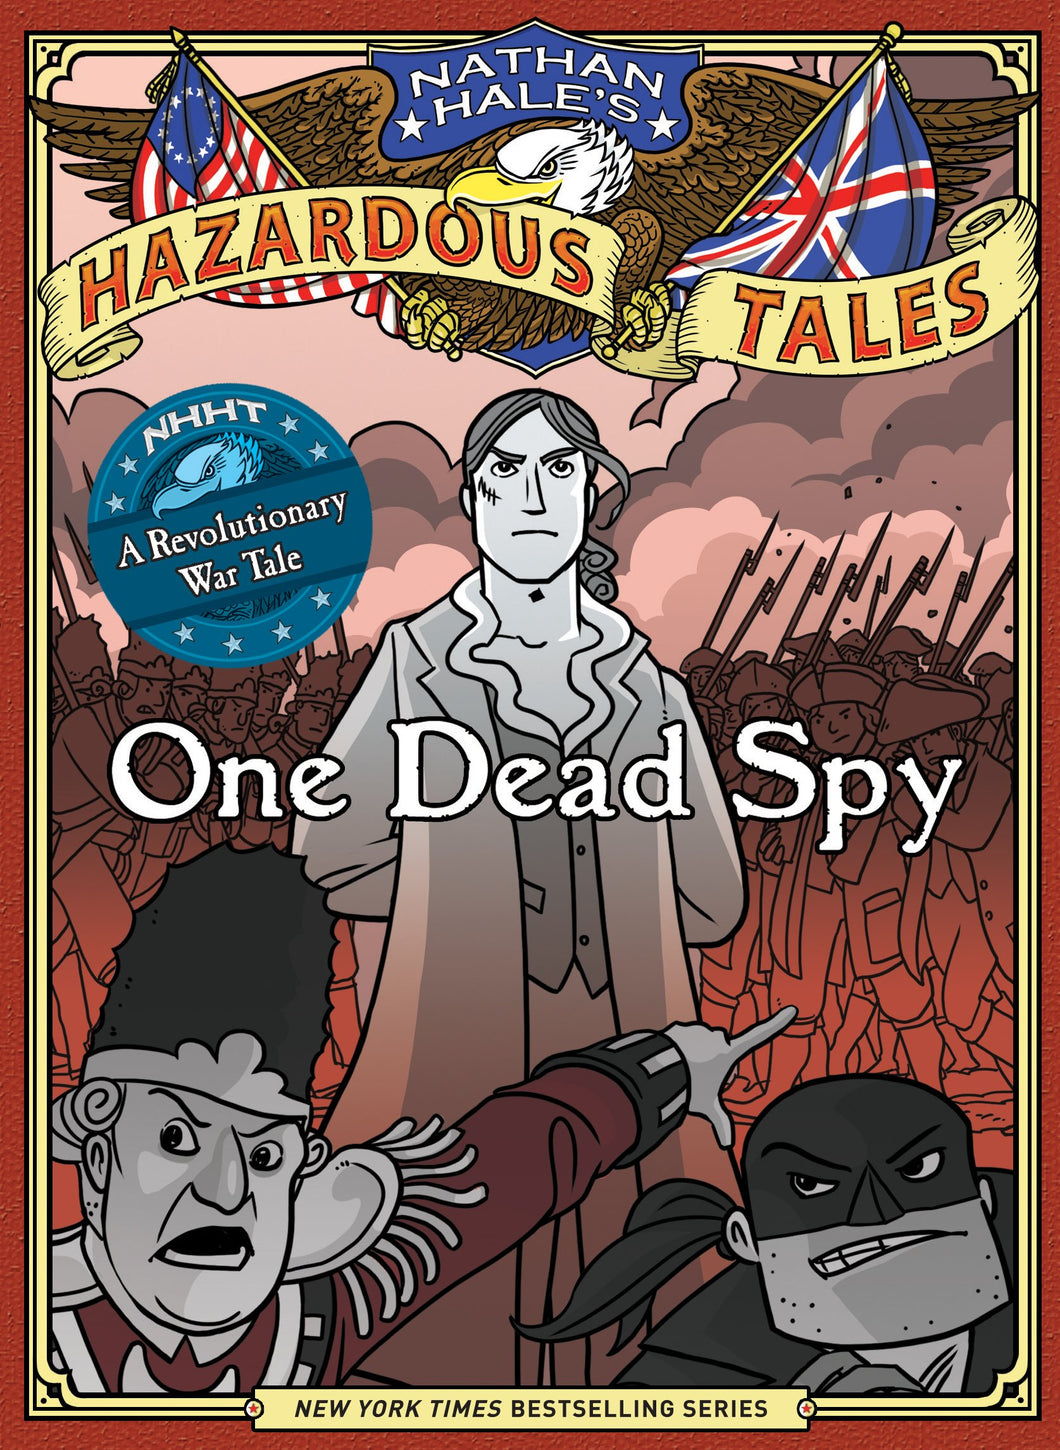 Nathan Hale's Hazardous Tales #1: One Dead Spy